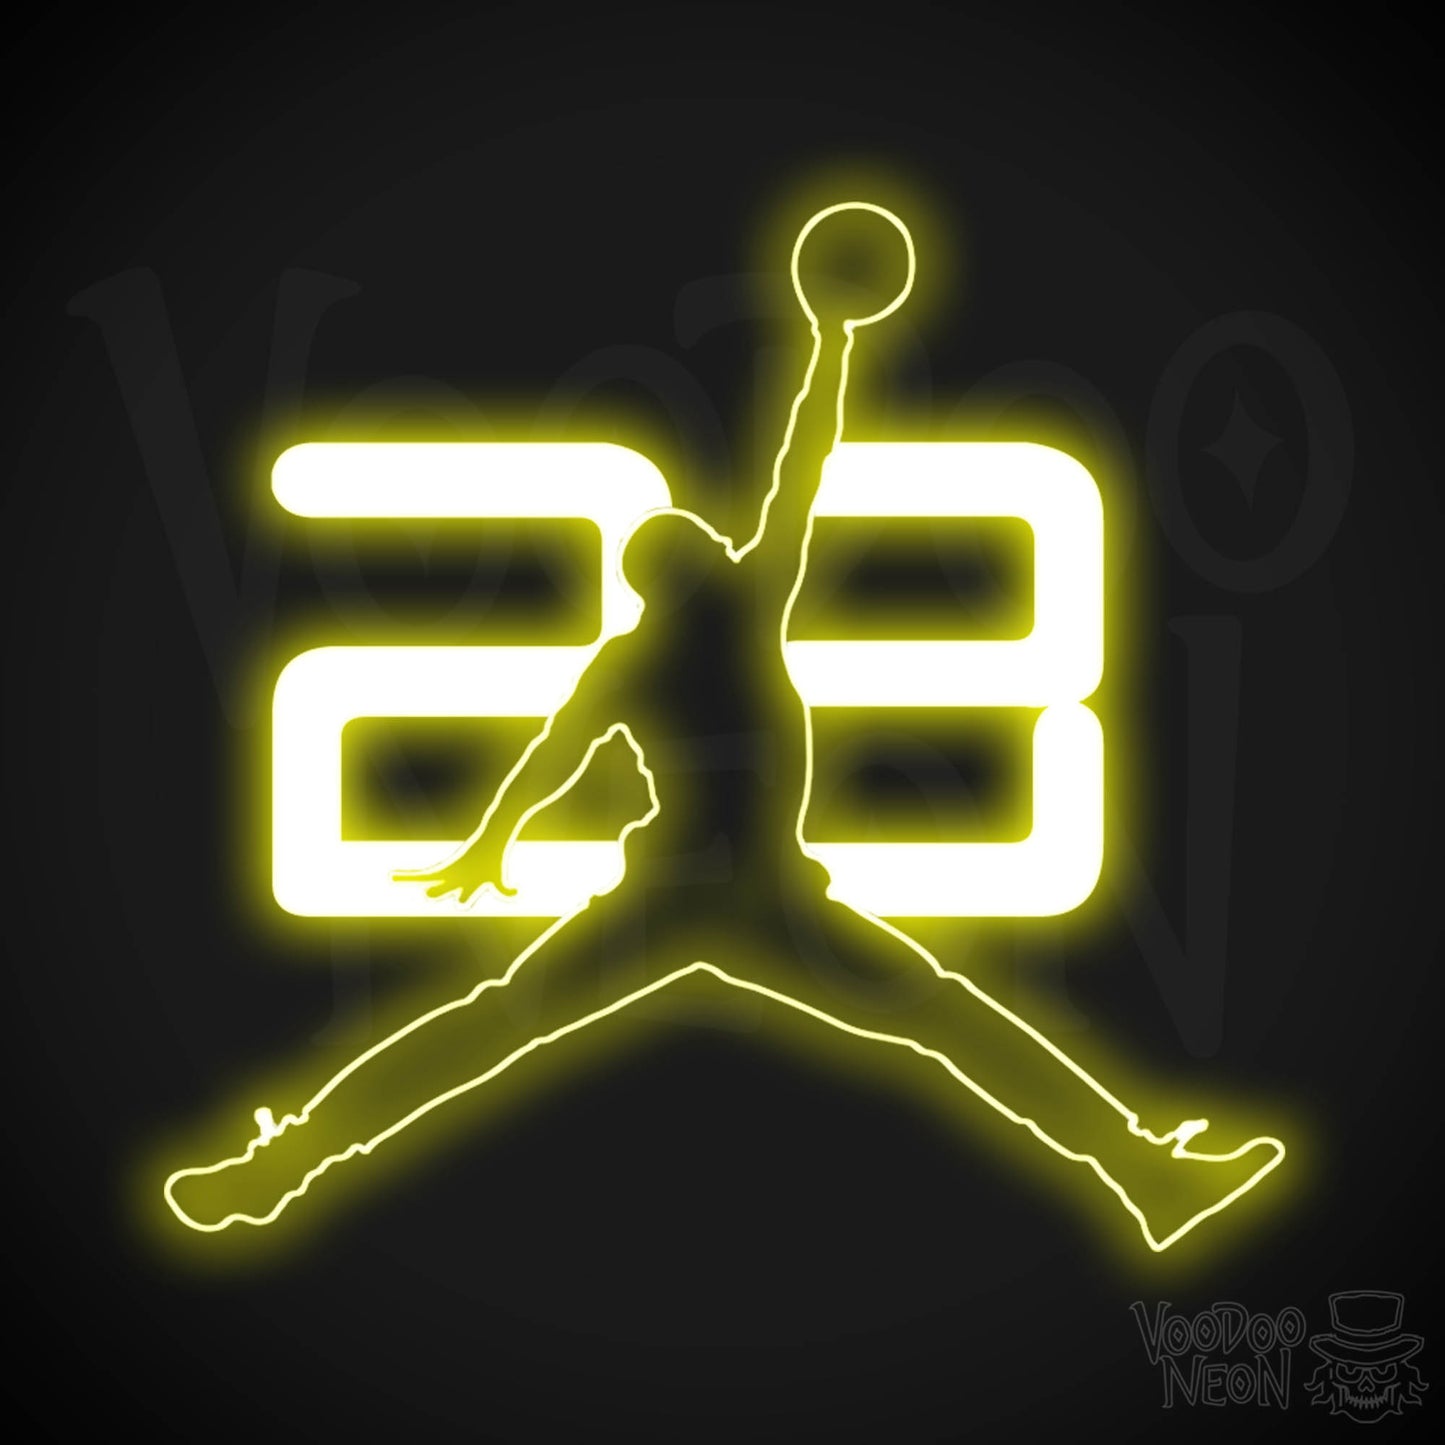 Neon Jordan Dunk - Michael Jordan Neon Wall Art - Neon Basketball Dunk Sign - Color Yellow